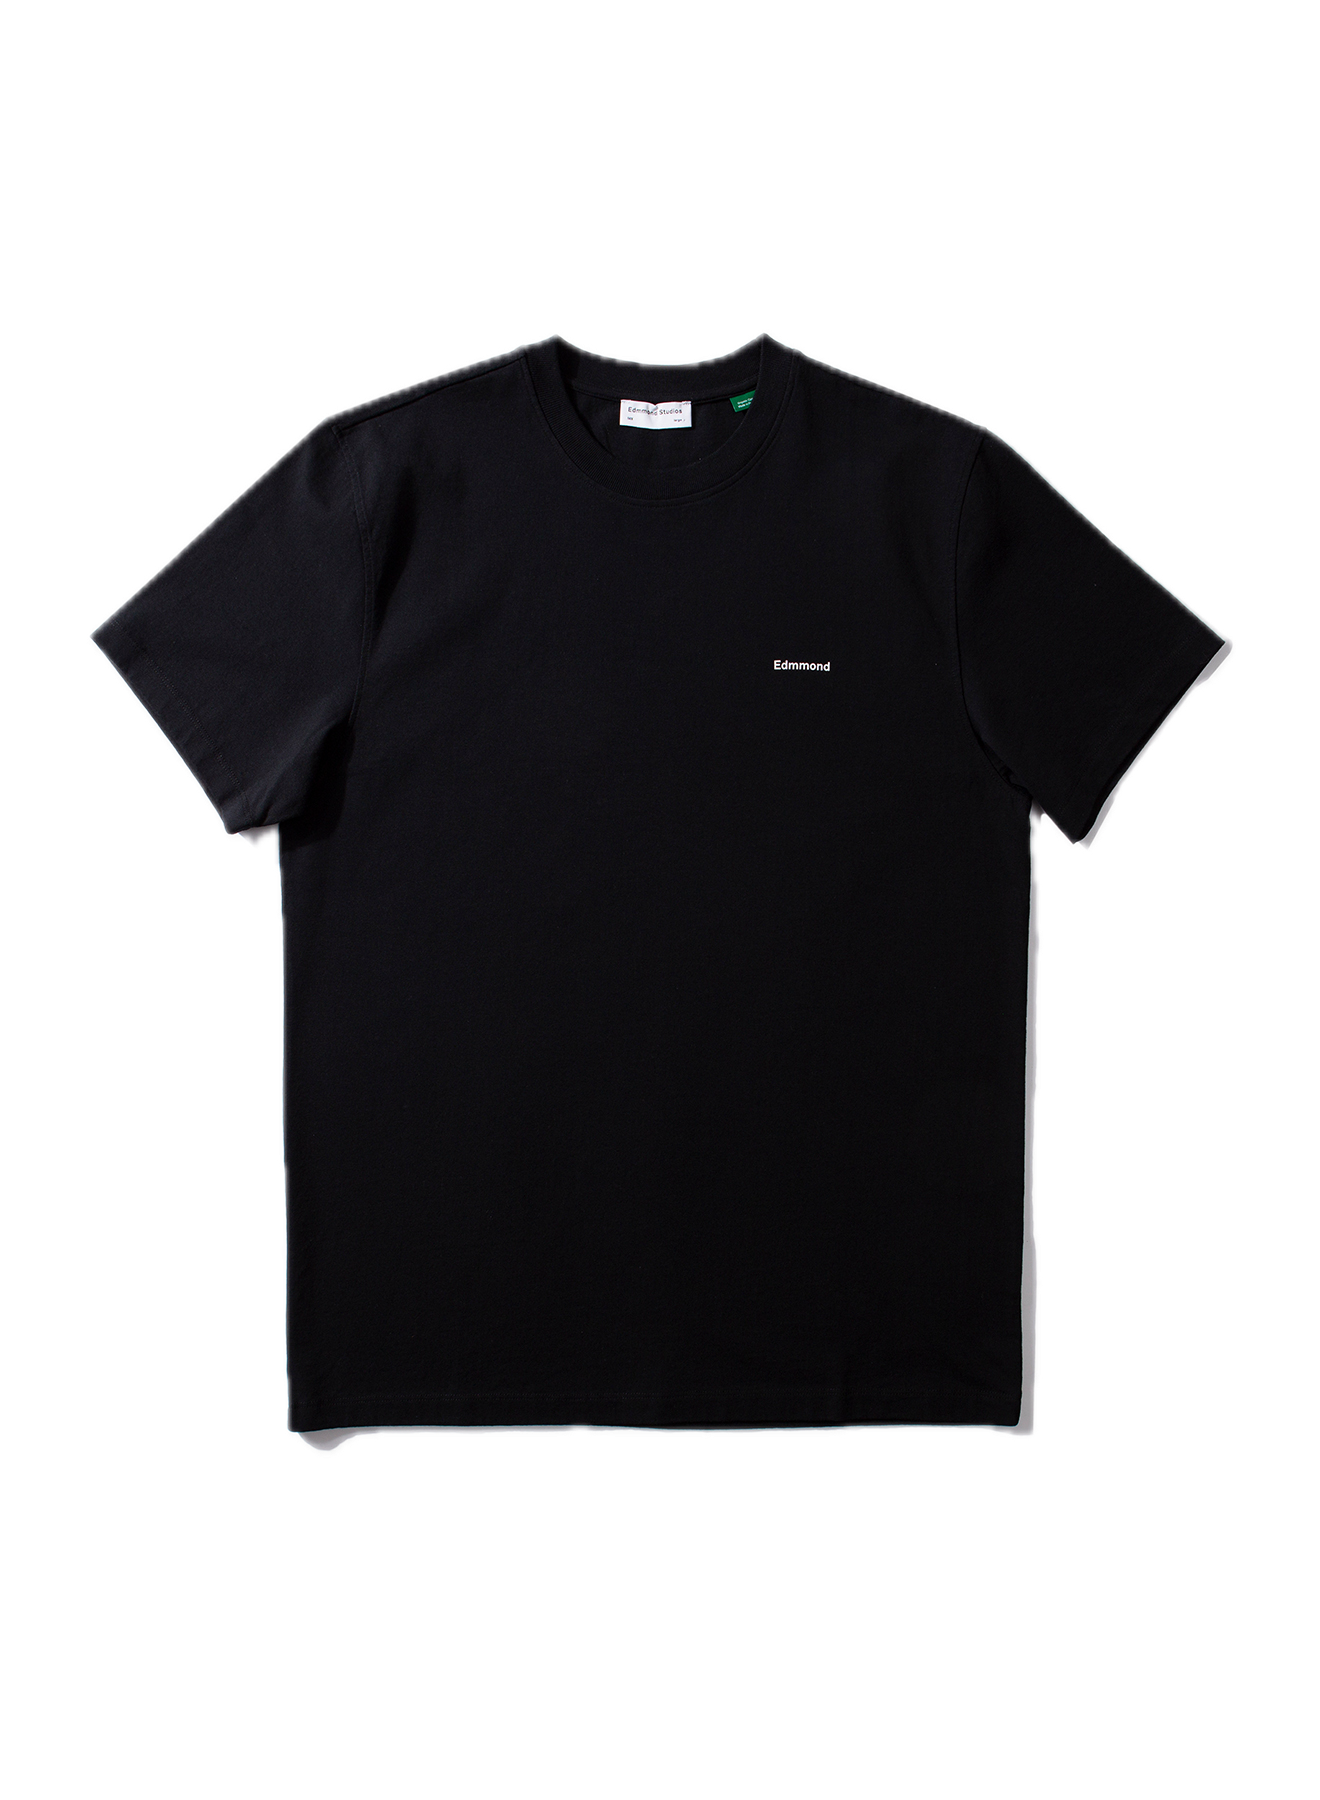 Edmmond Studios Mini Logo Schlichtes schwarzes T-Shirt